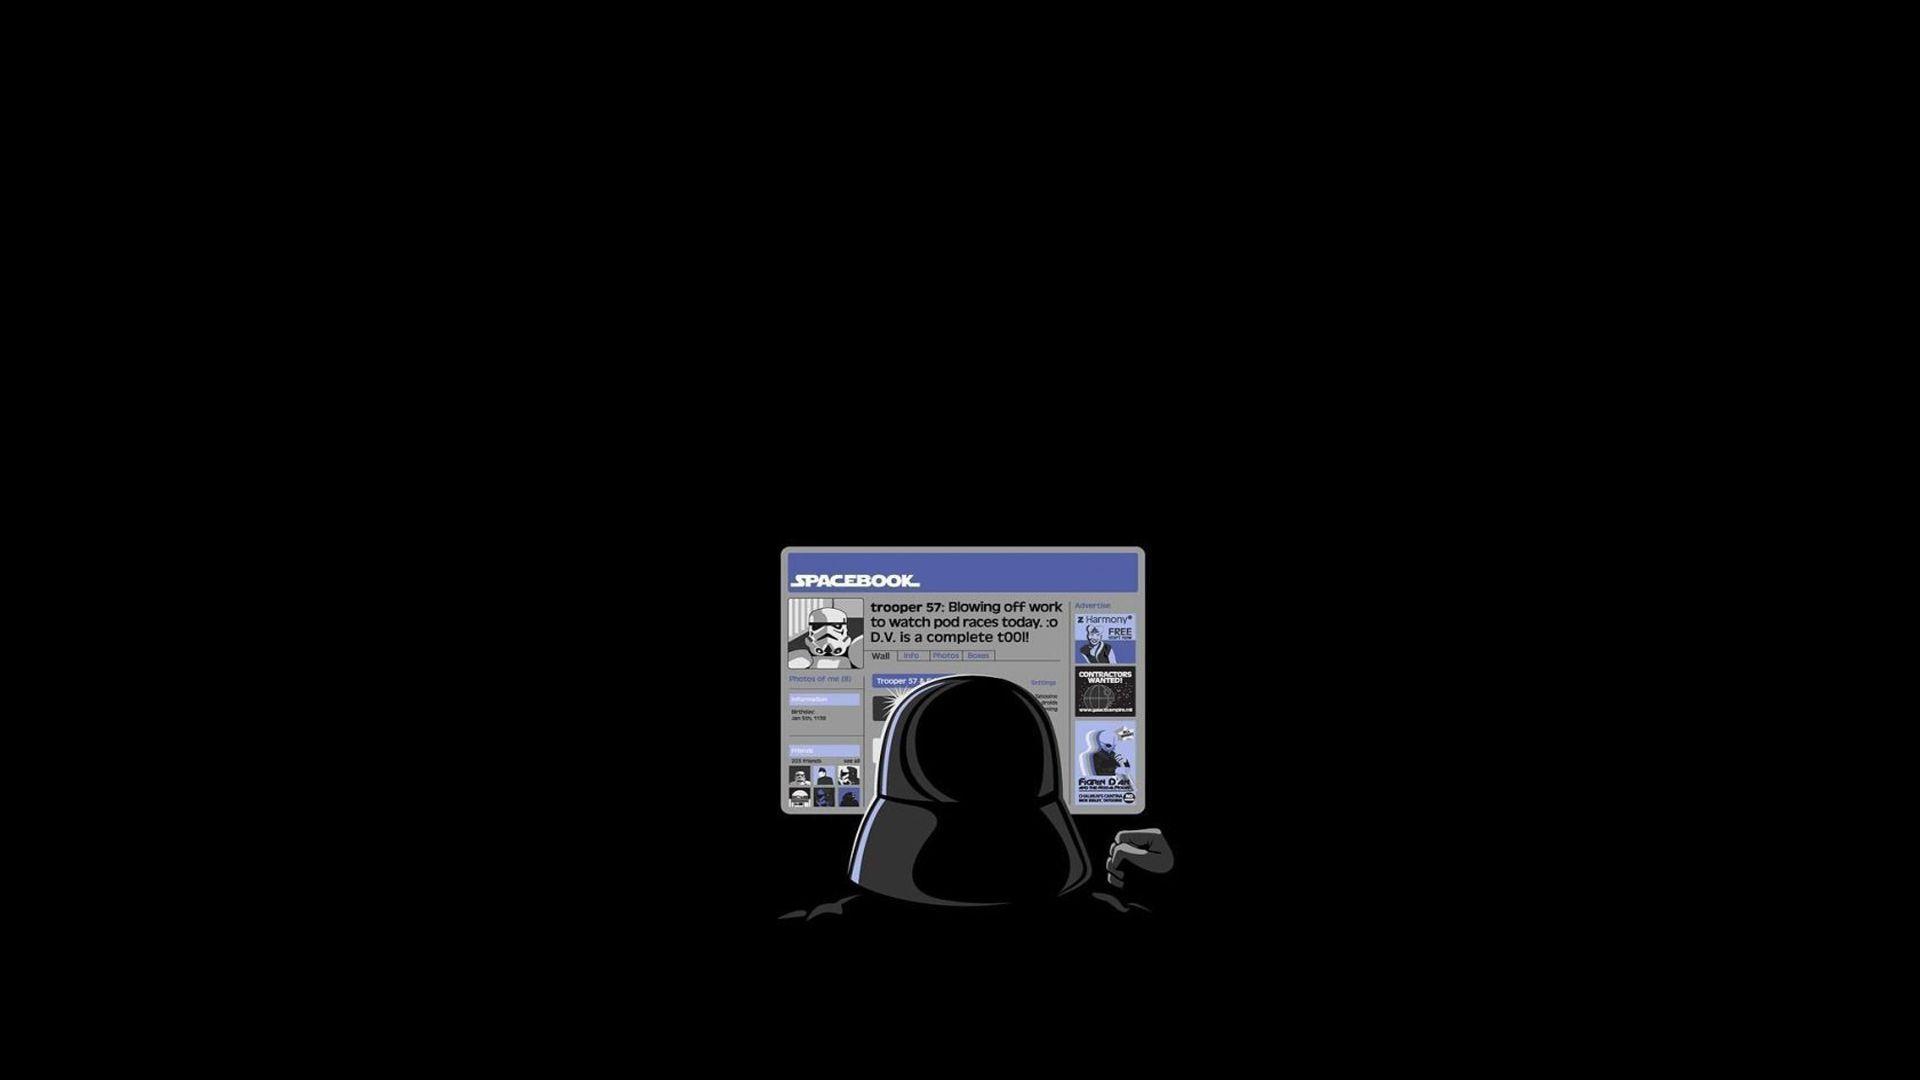 Darth Vader Space Book Funny Desktop Wallpaper Lucu Kocak